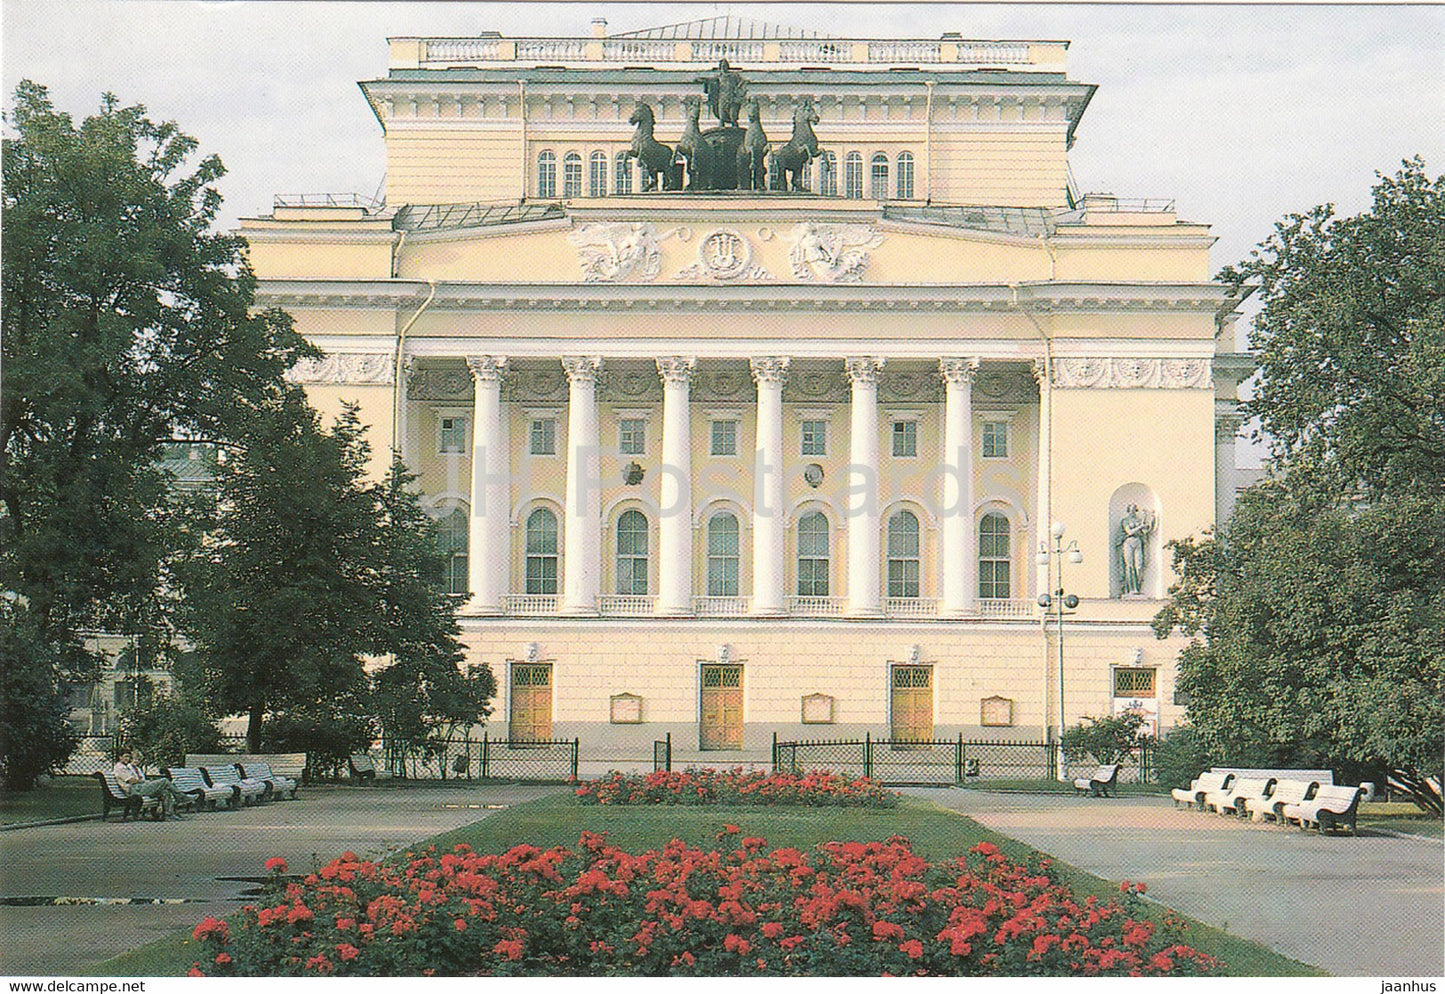 Leningrad - St Petersburg - Pushkin Academical Theatre - Russia USSR - unused - JH Postcards